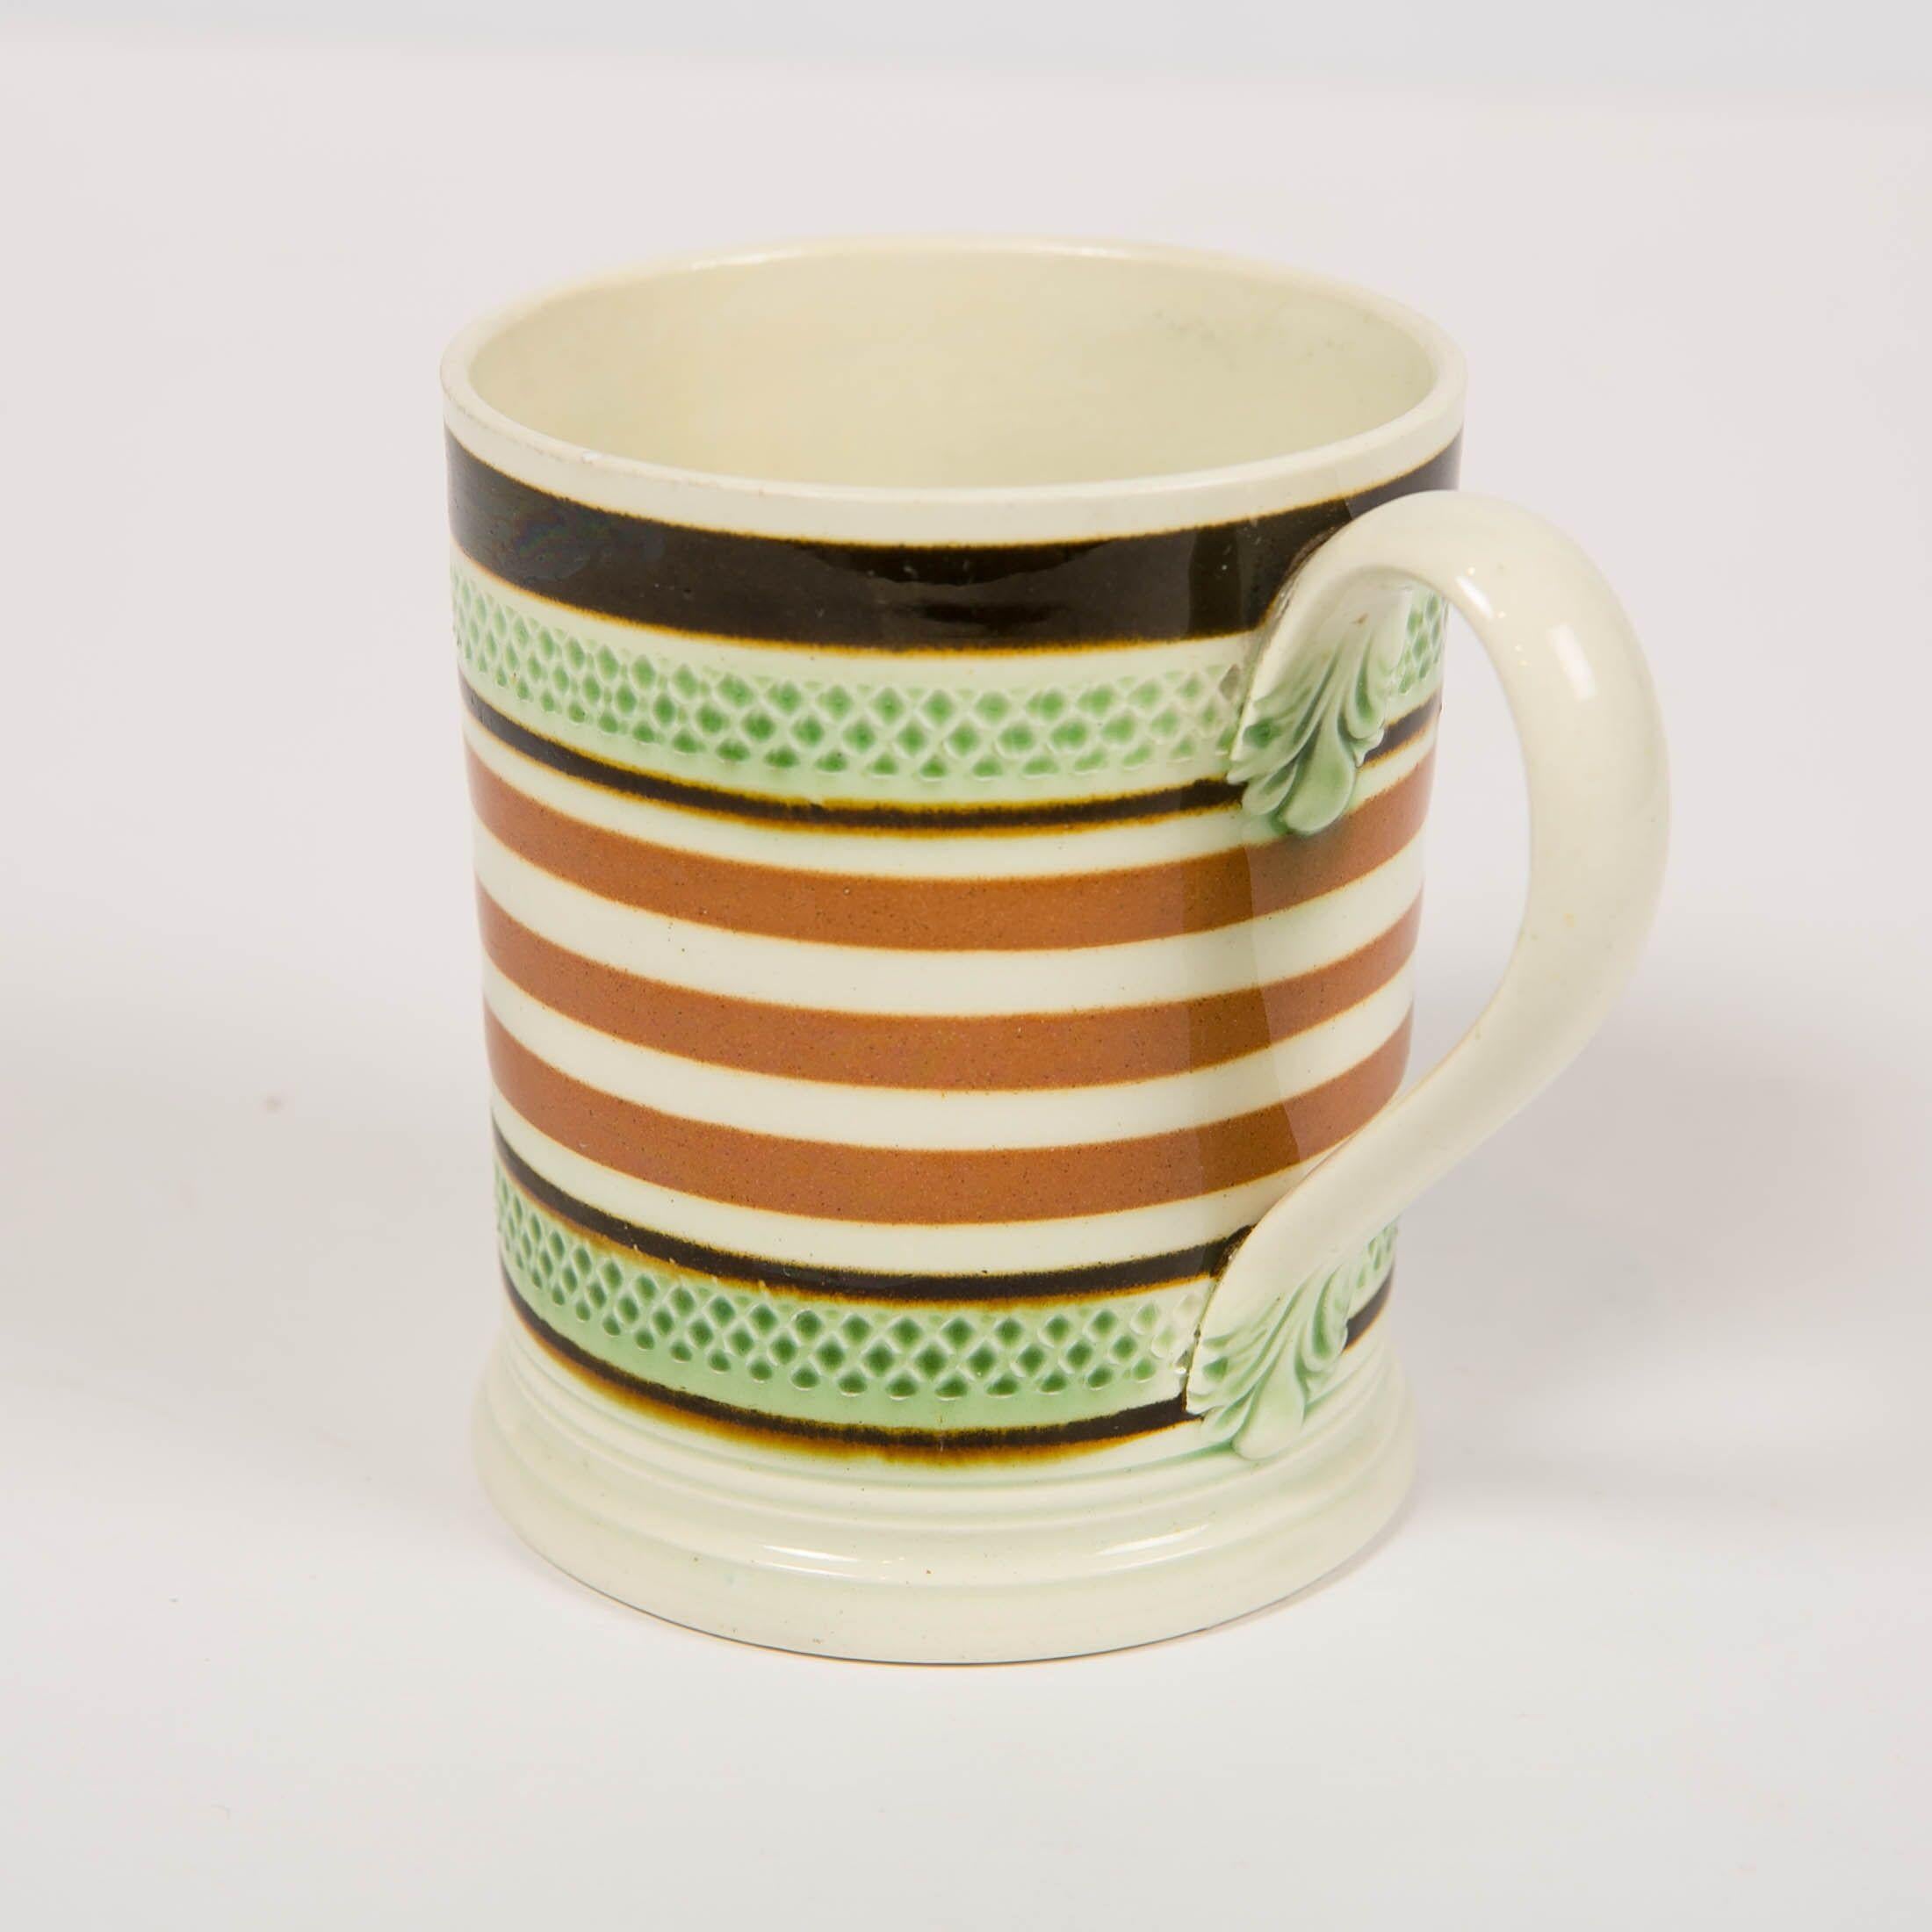 Glazed Mochaware Mug Banded with Green Glaze and Brown Slip, England, circa 1810